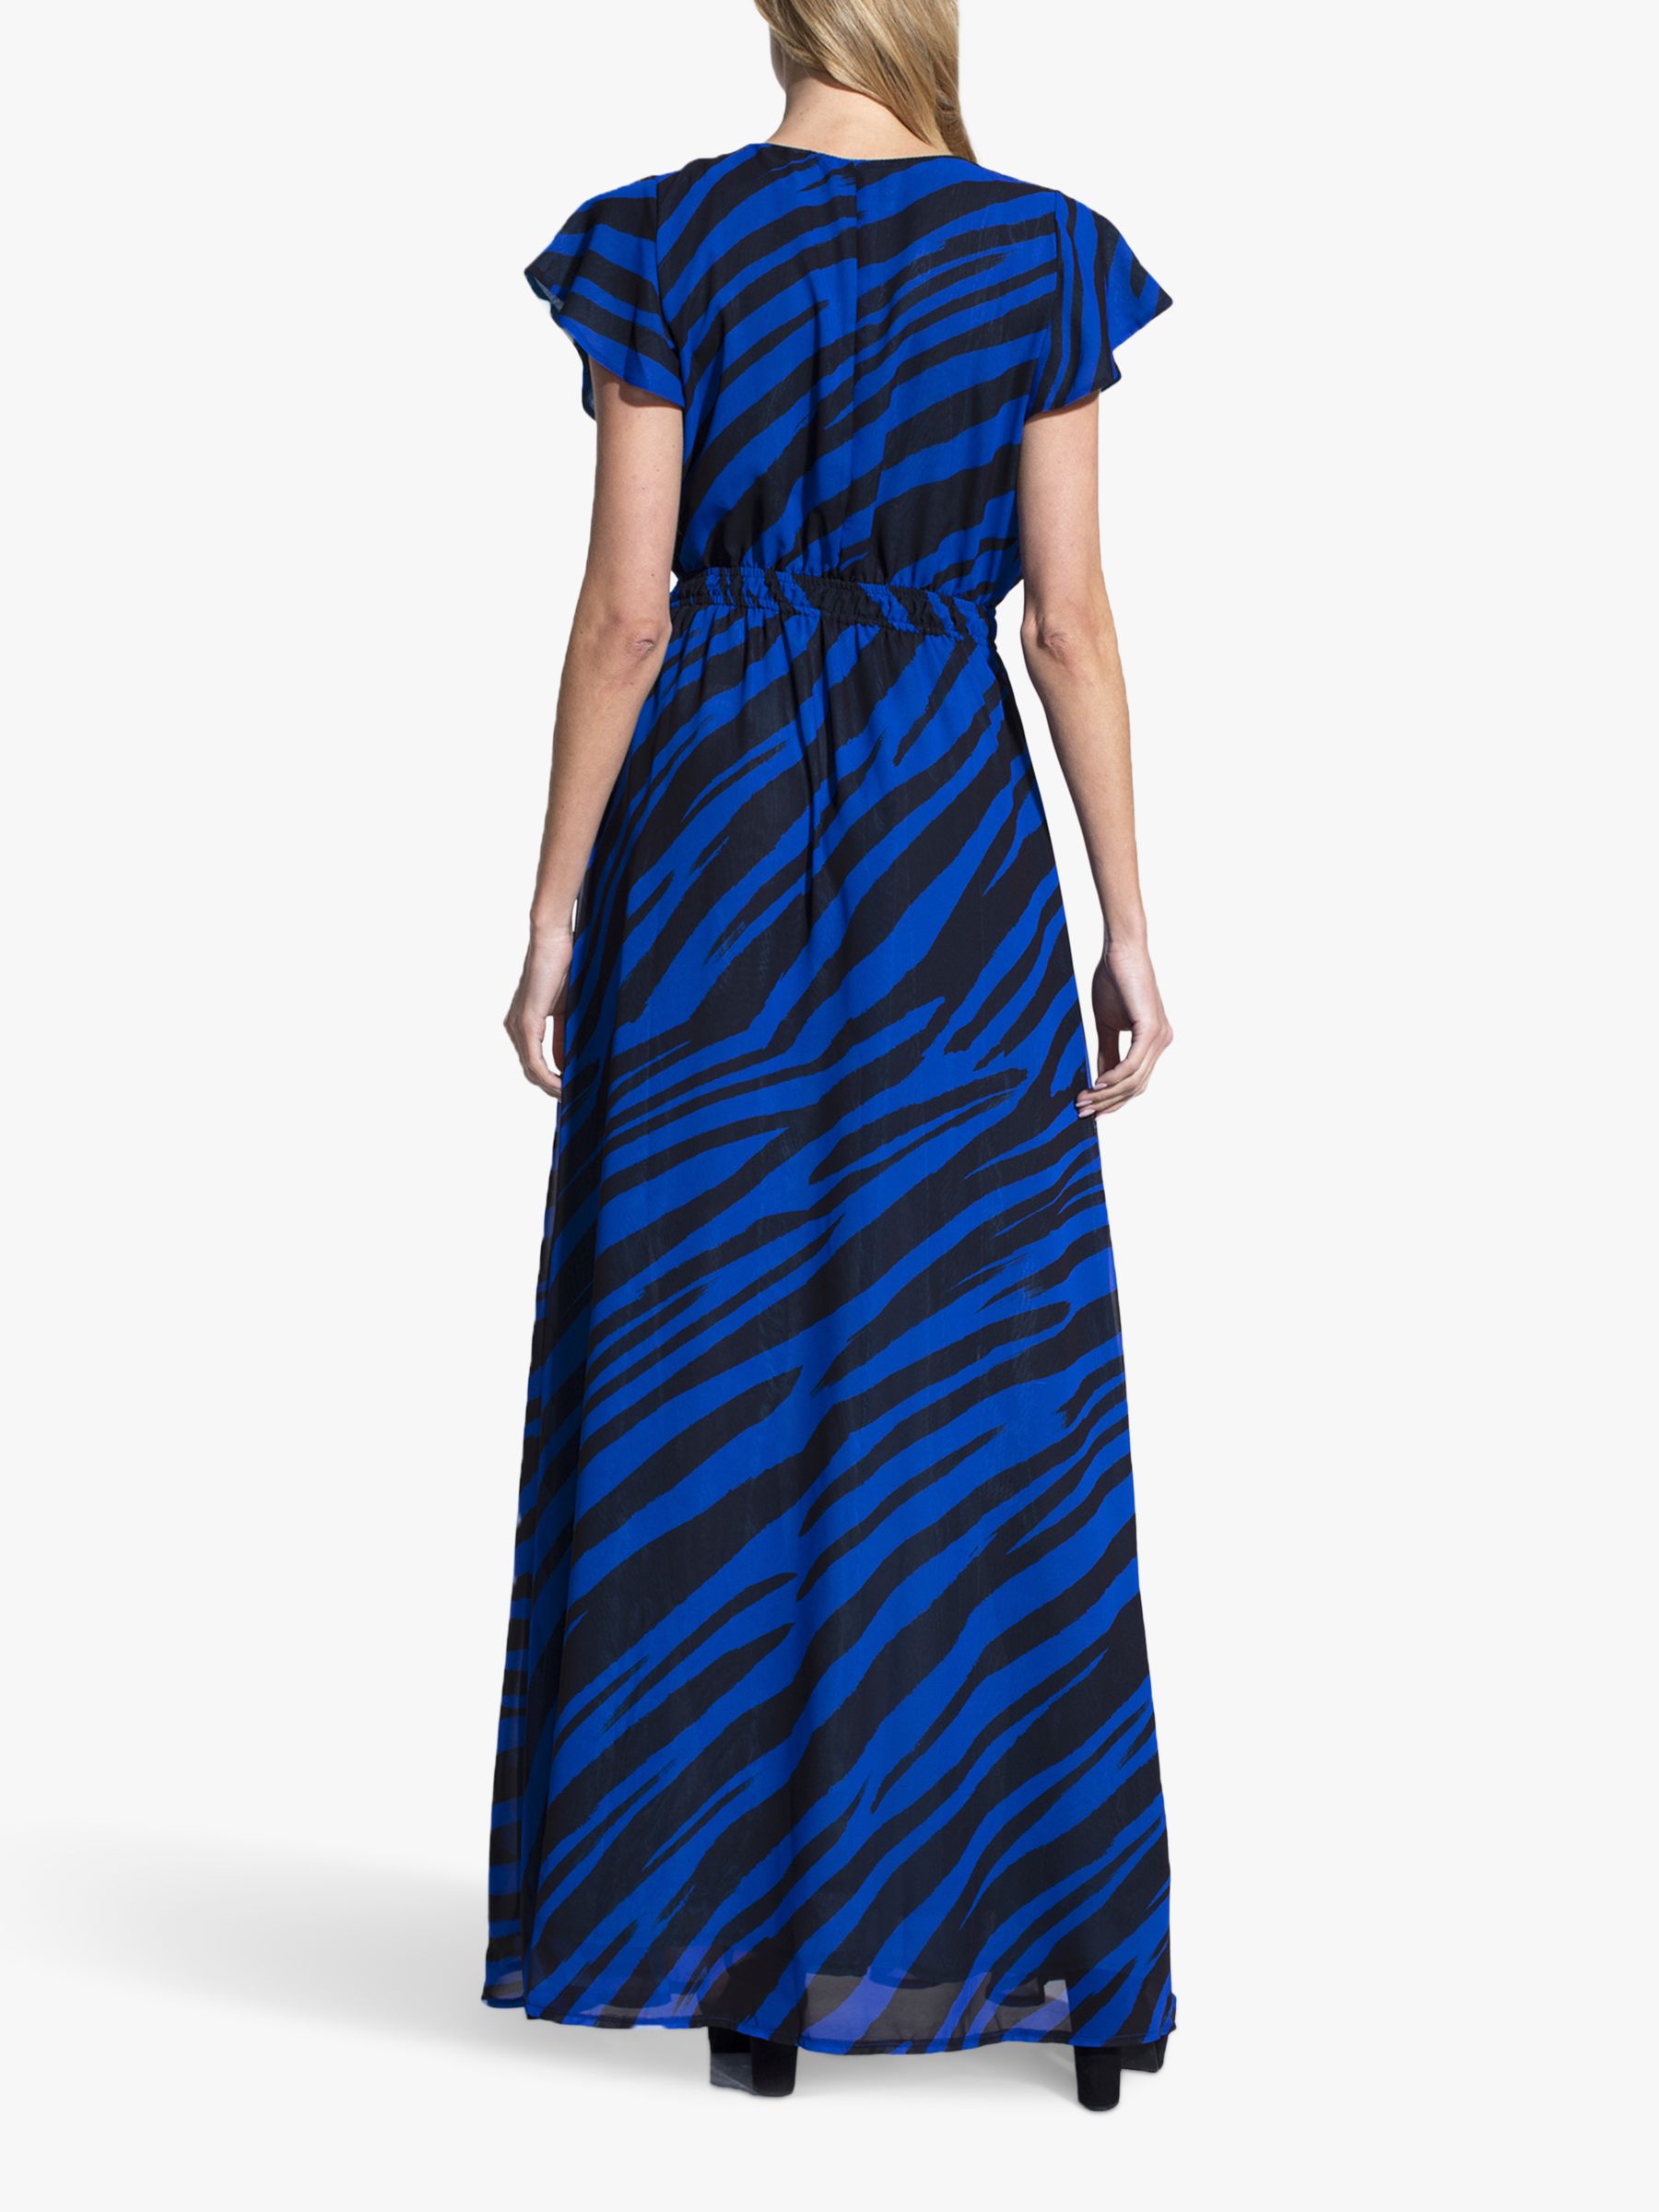 HotSquash Zebra Print Wrap Top Maxi Dress, Blue/Black, 8